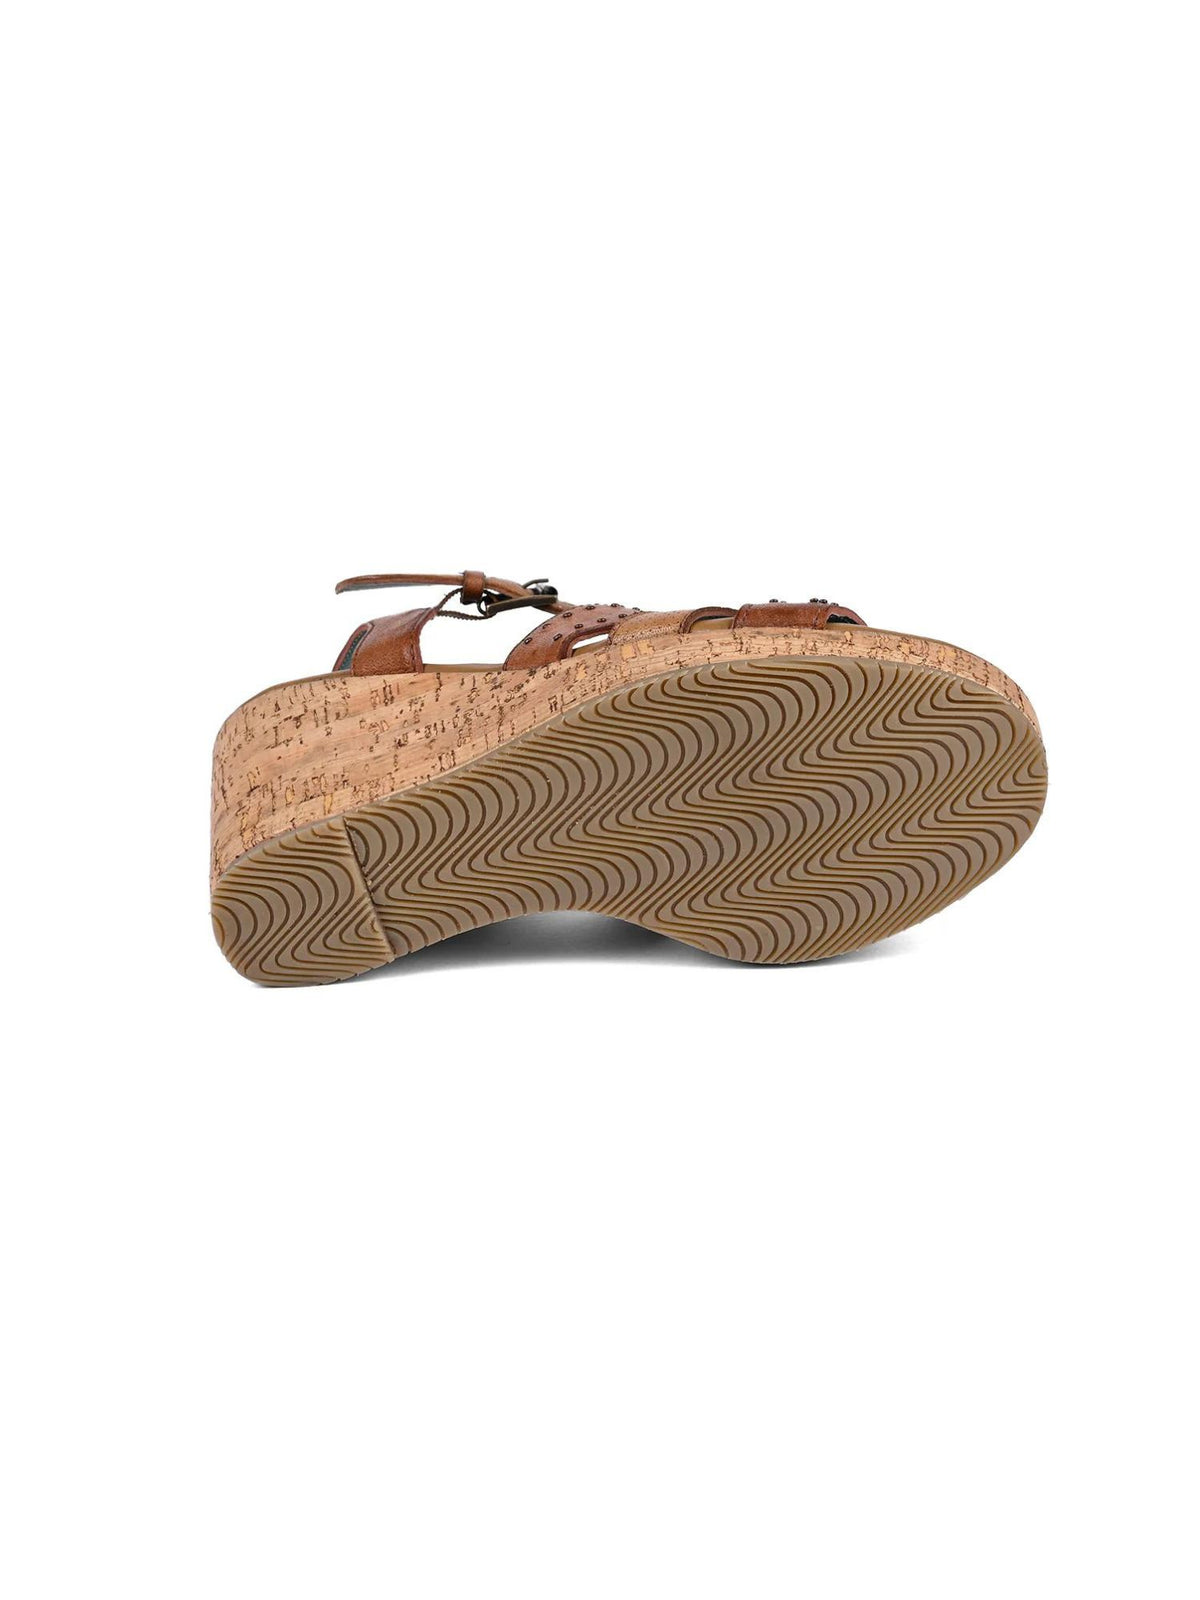 roan different cork wedge sandal in pecan almond-bottom